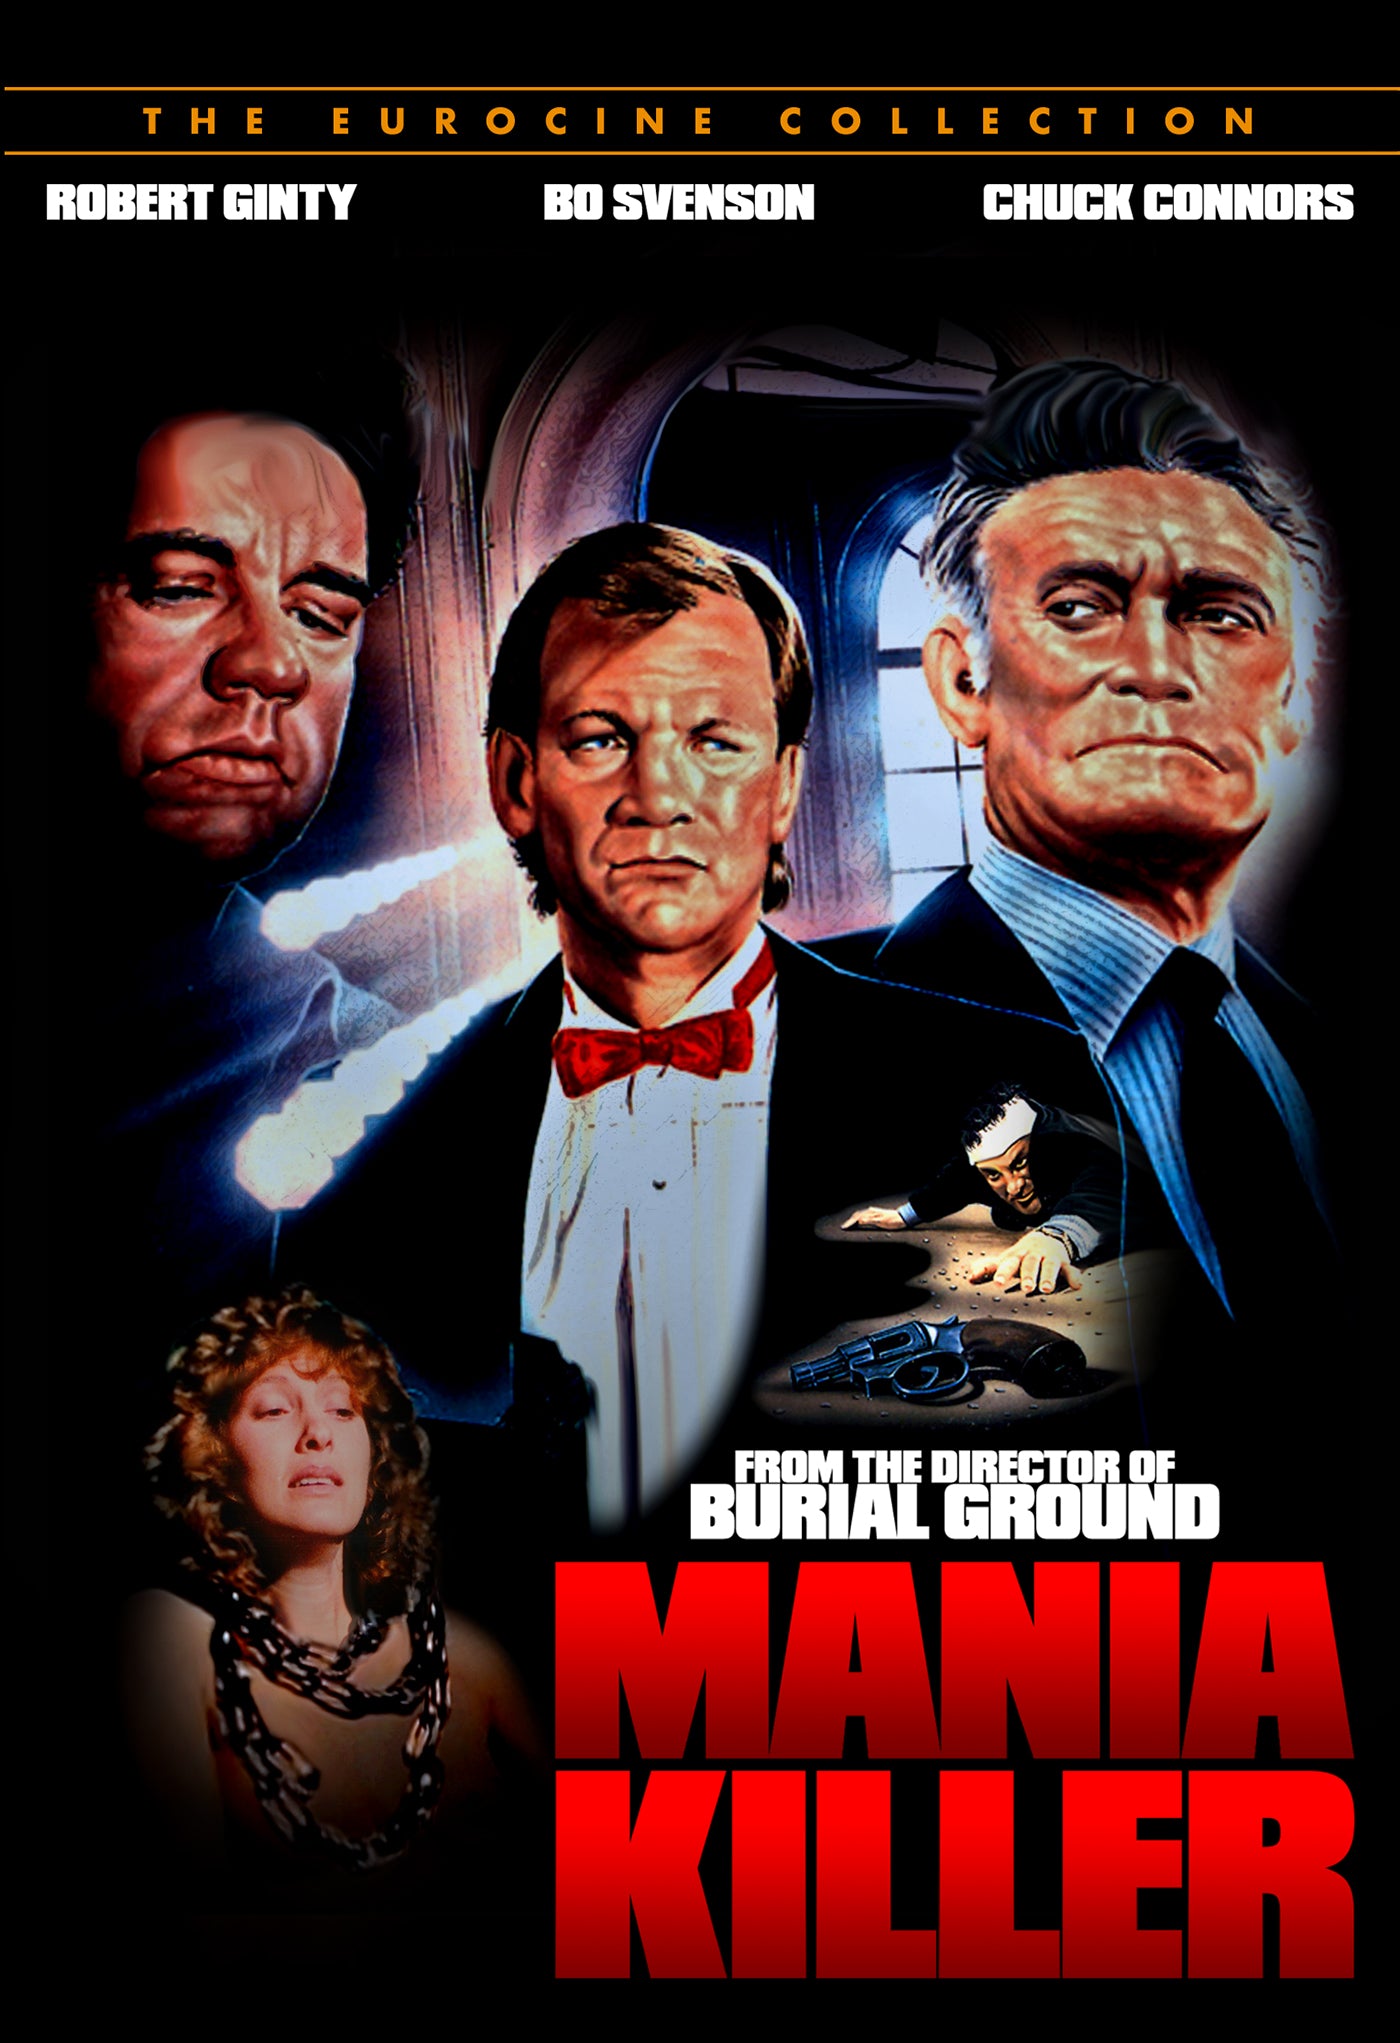 MANIA KILLER DVD